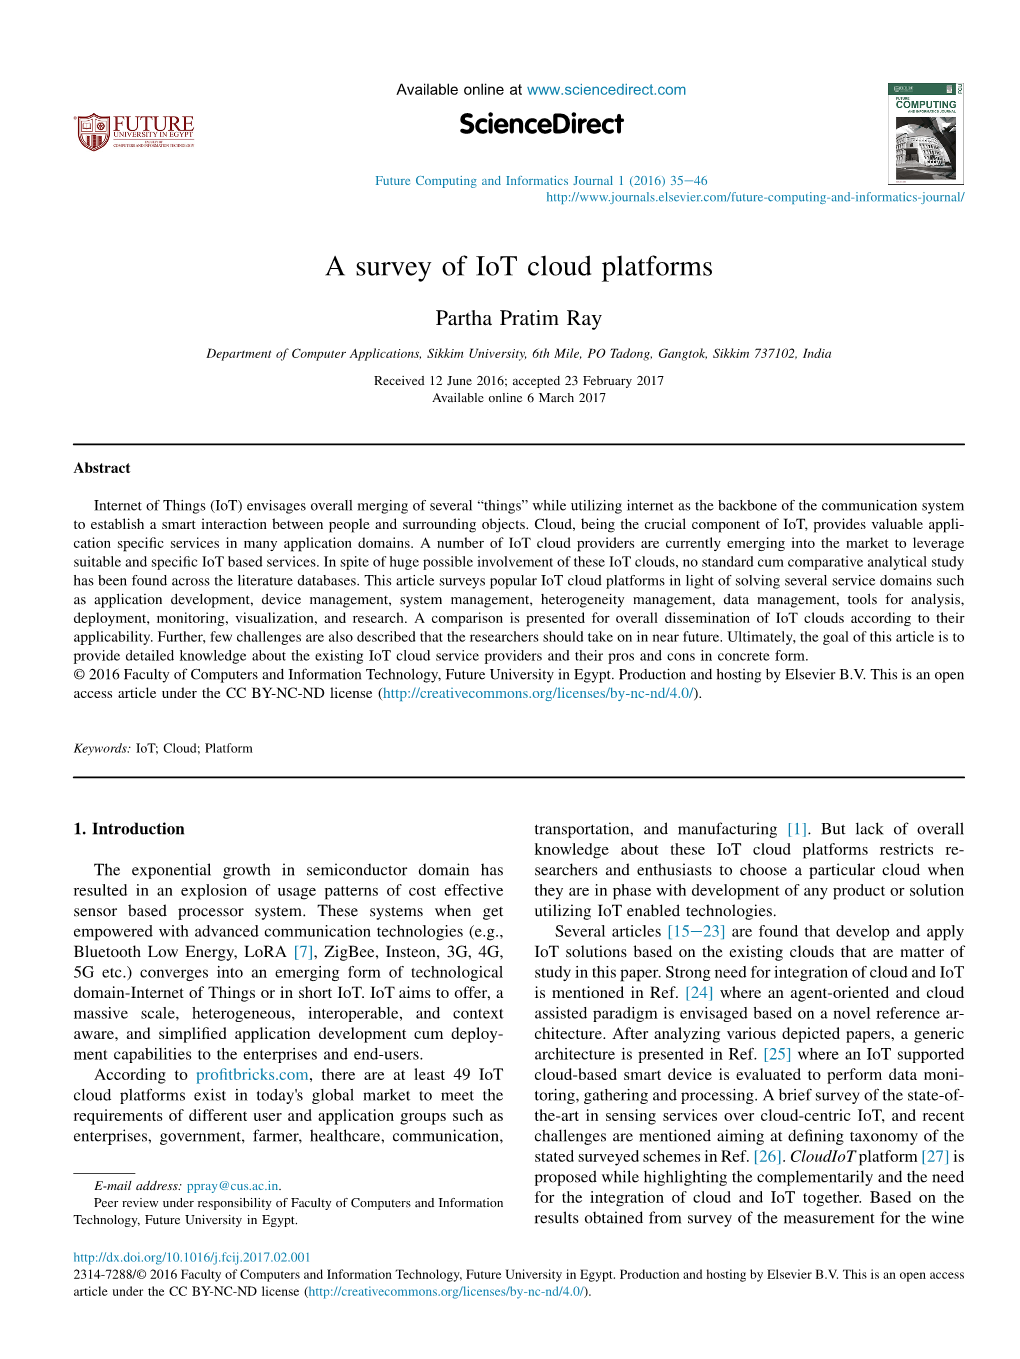 A Survey of Iot Cloud Platforms